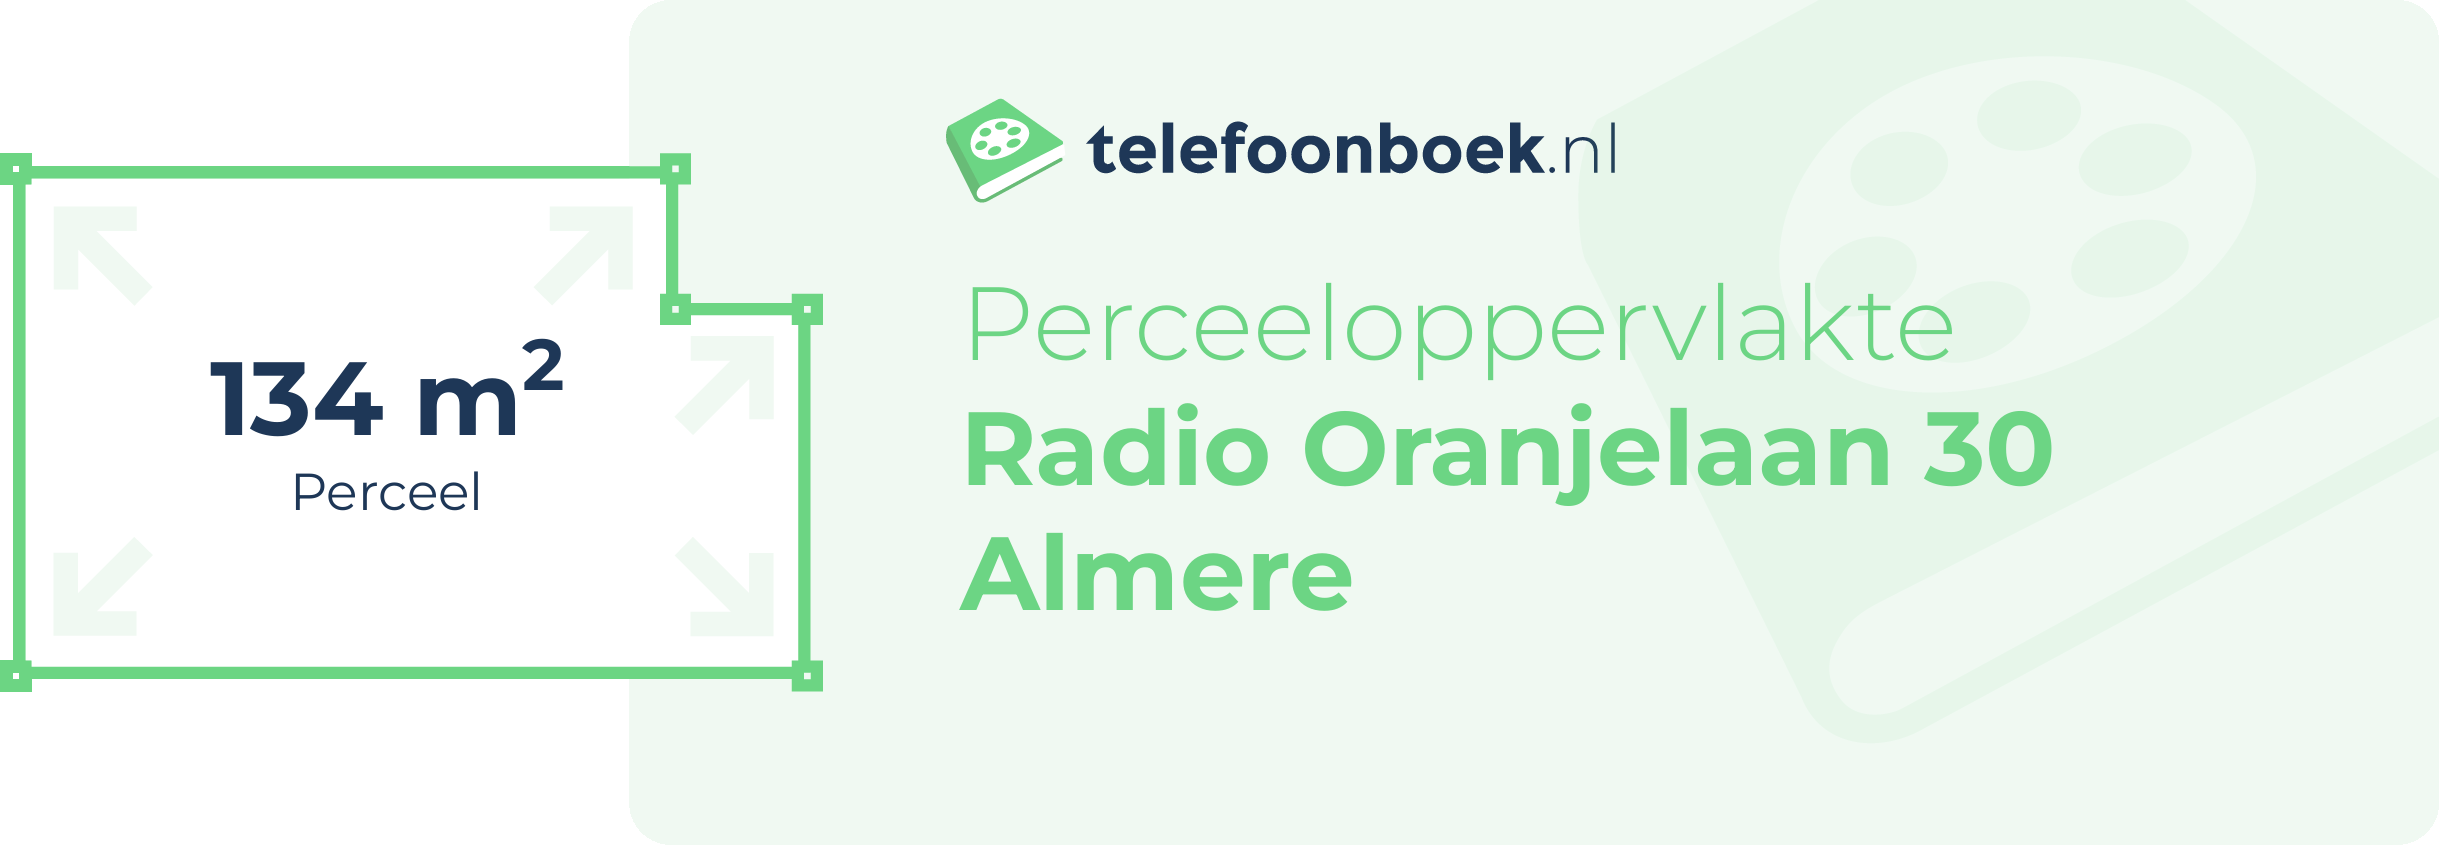 Perceeloppervlakte Radio Oranjelaan 30 Almere